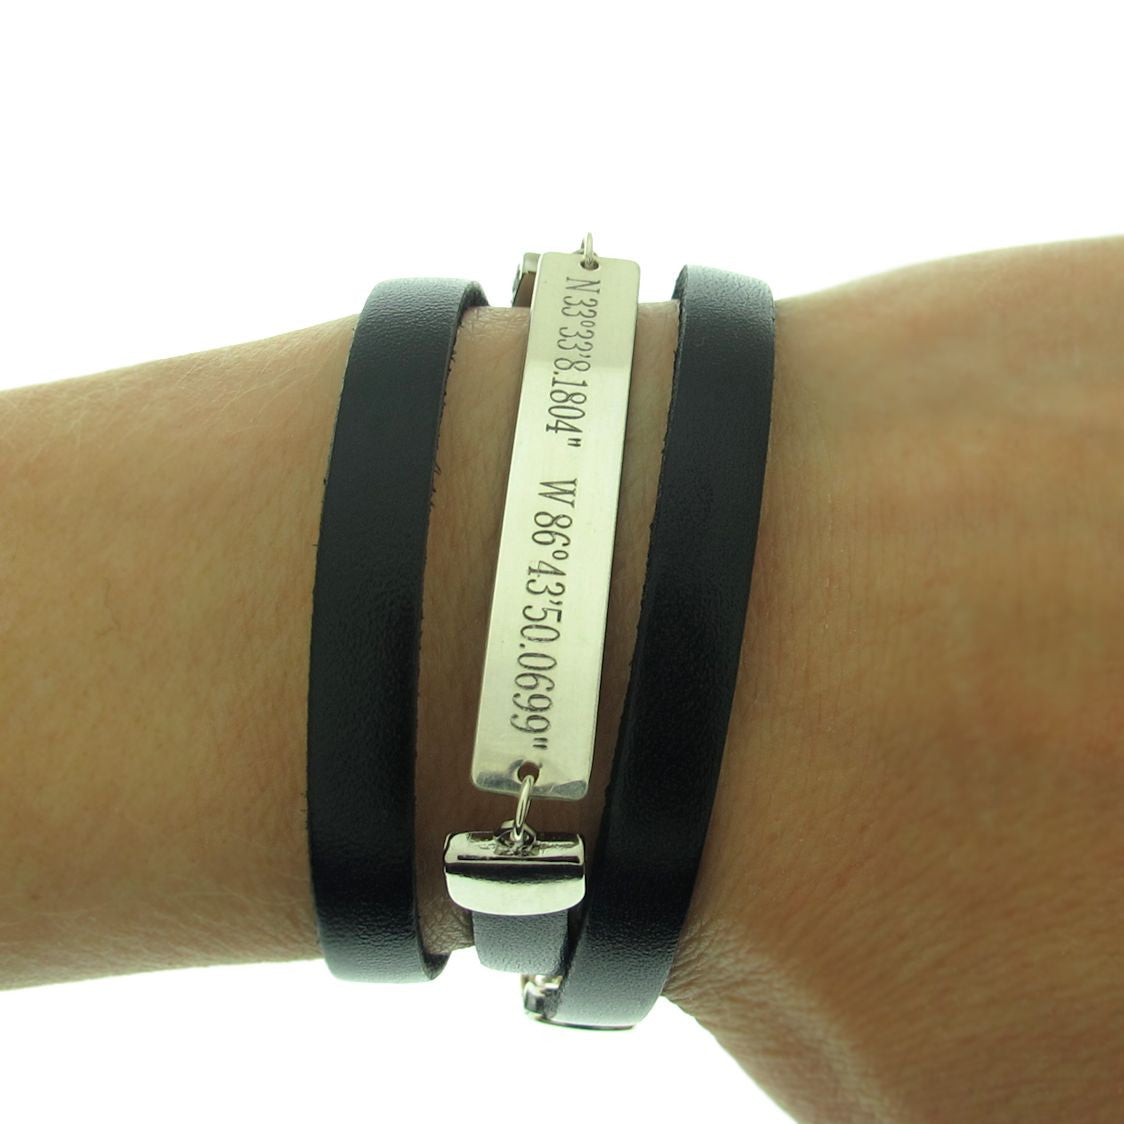 Personalized leather wrap bracelets